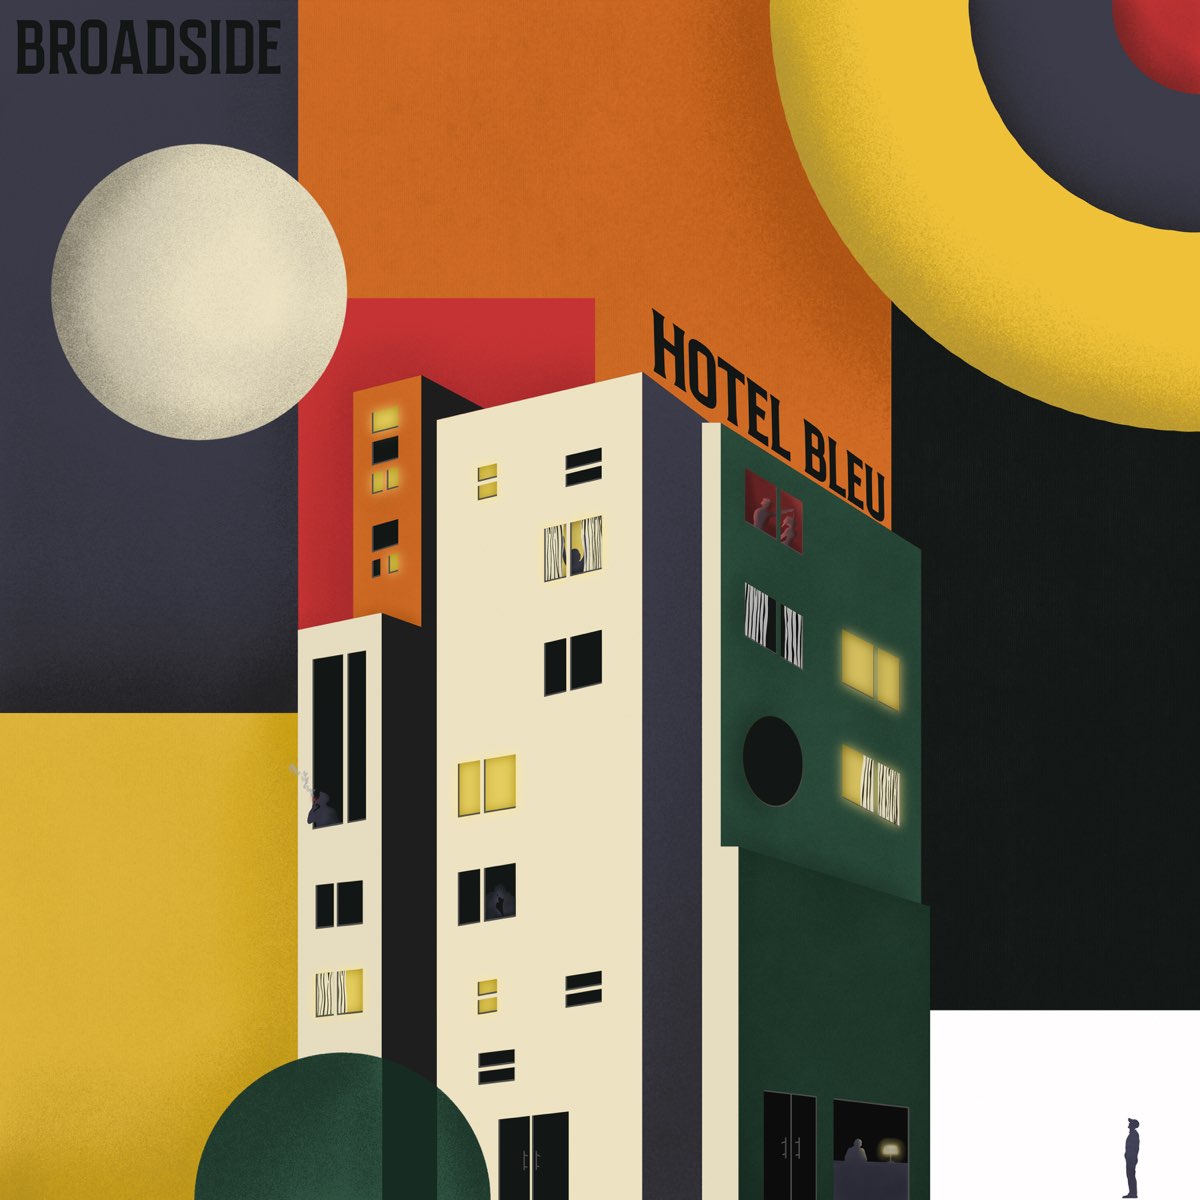 Broadside Hotel Bleu cover artwork